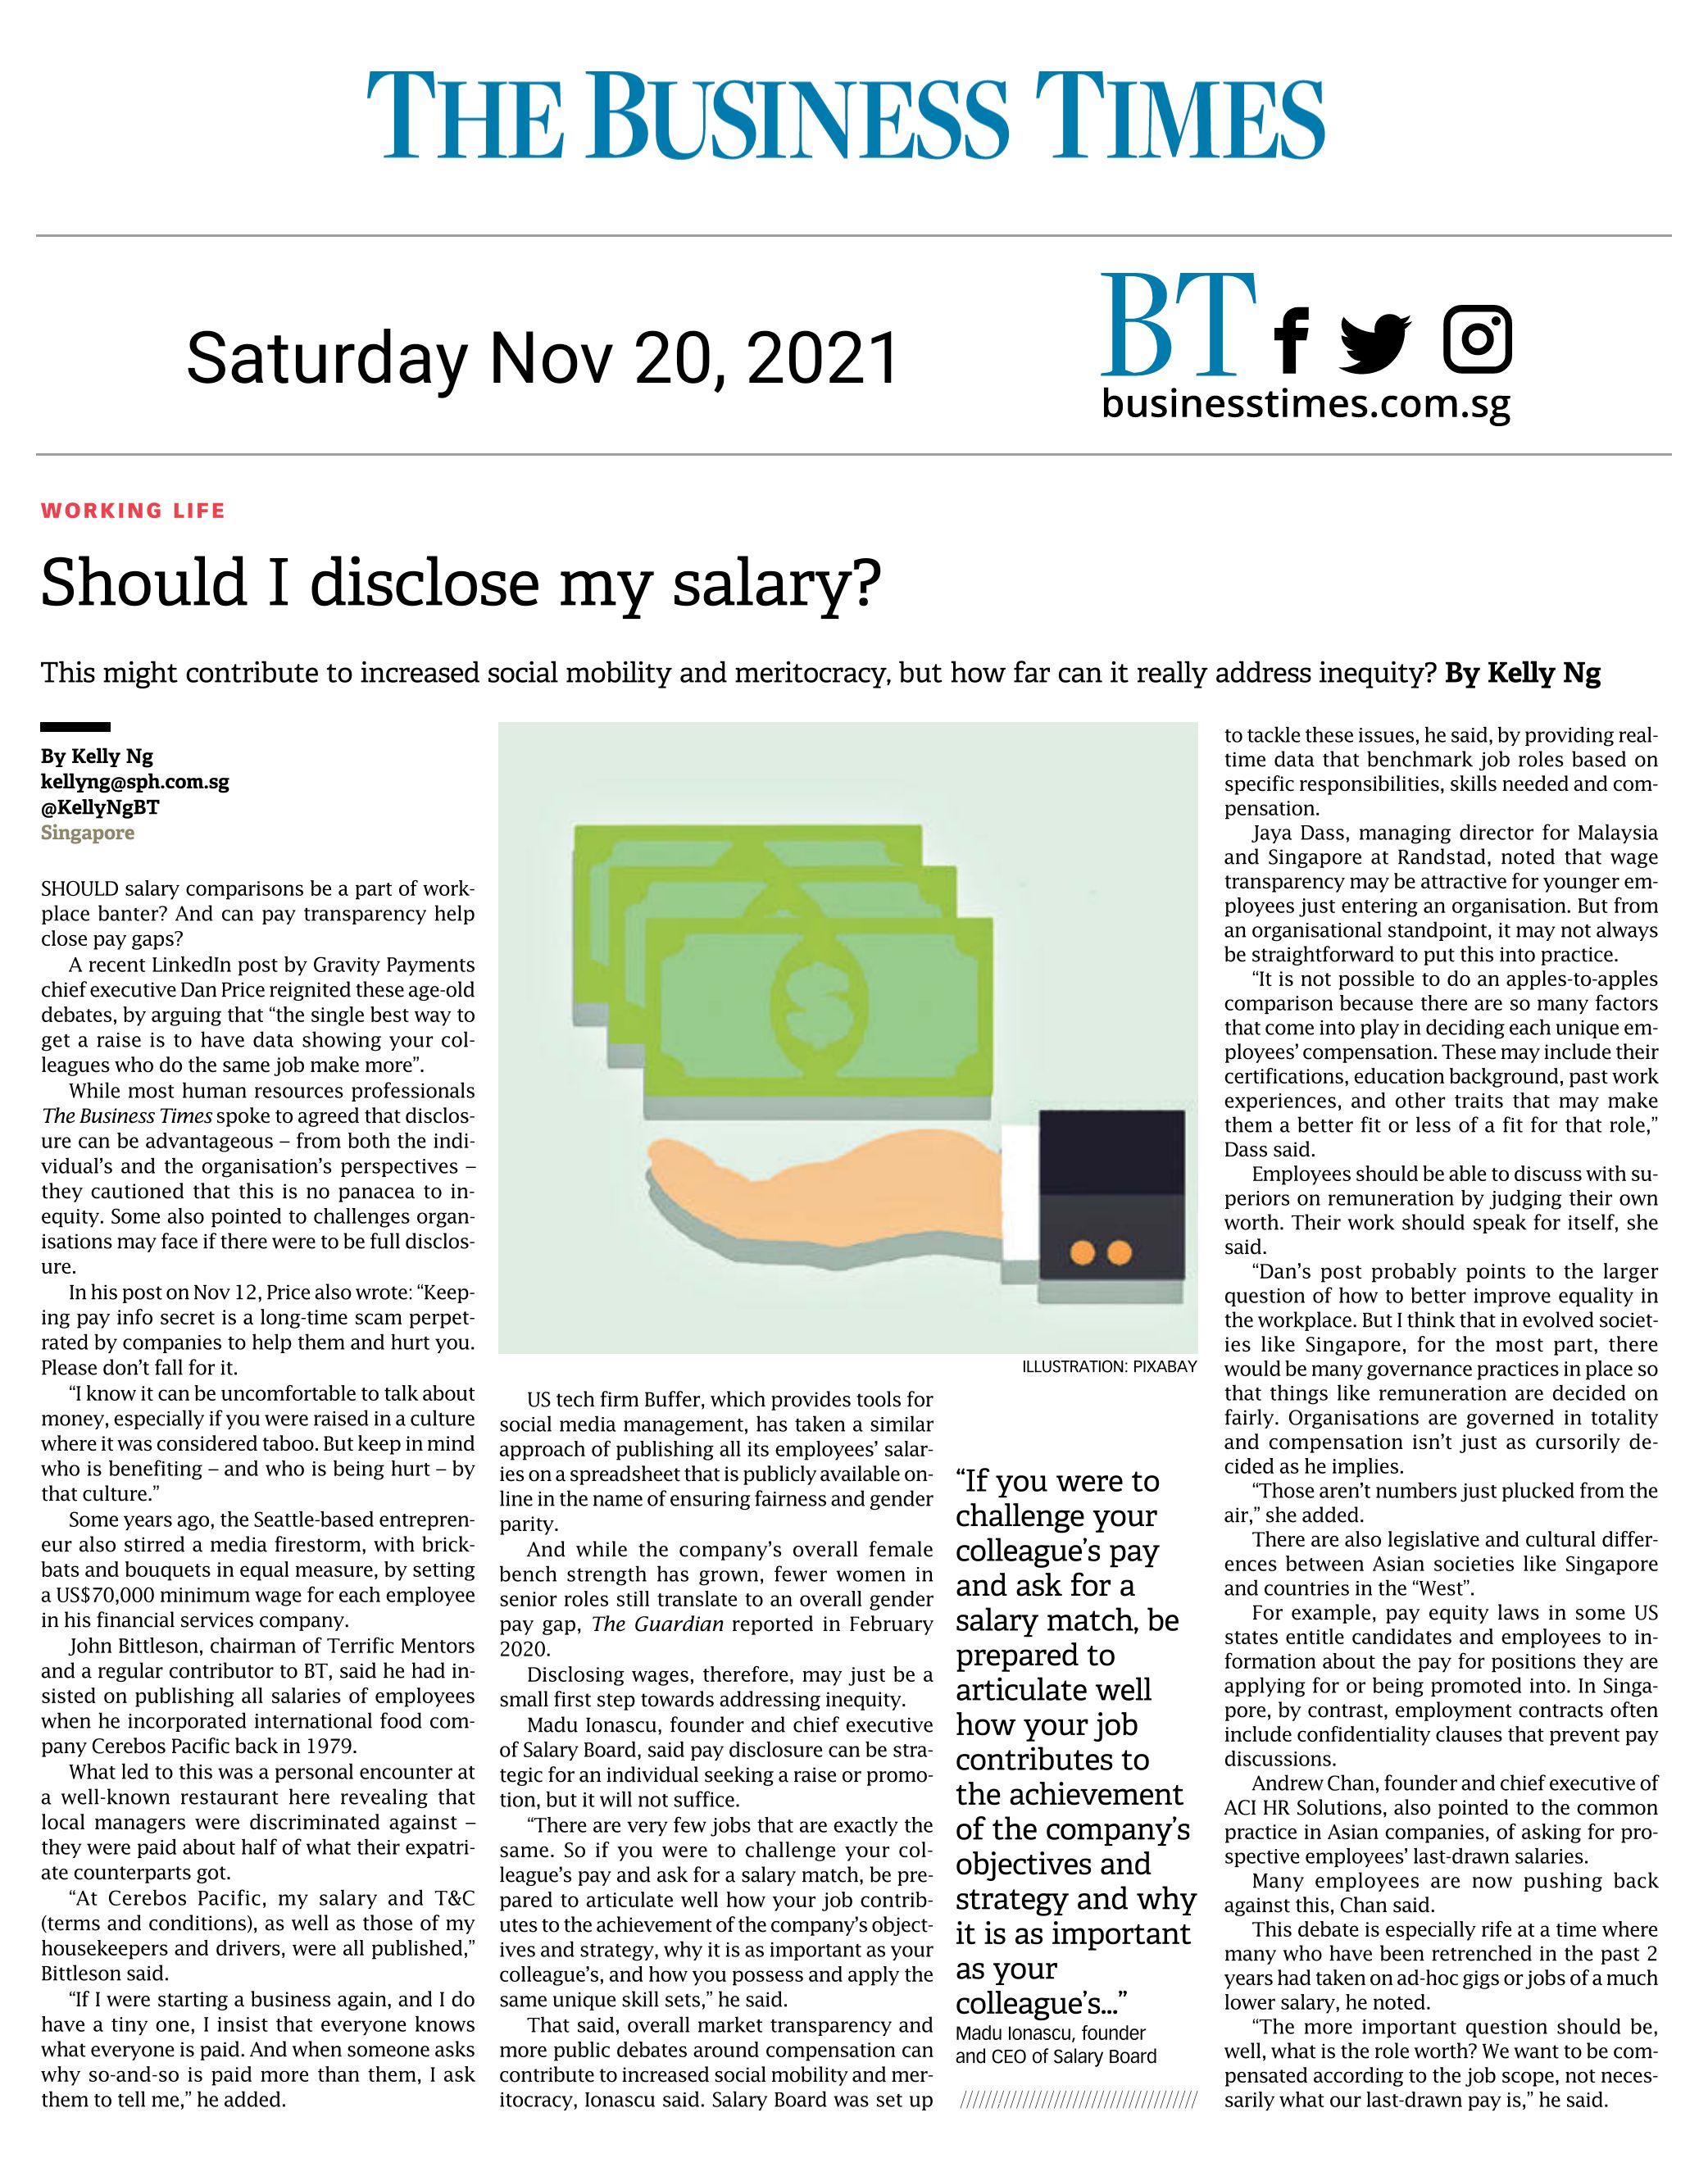 Should I disclose my salary?